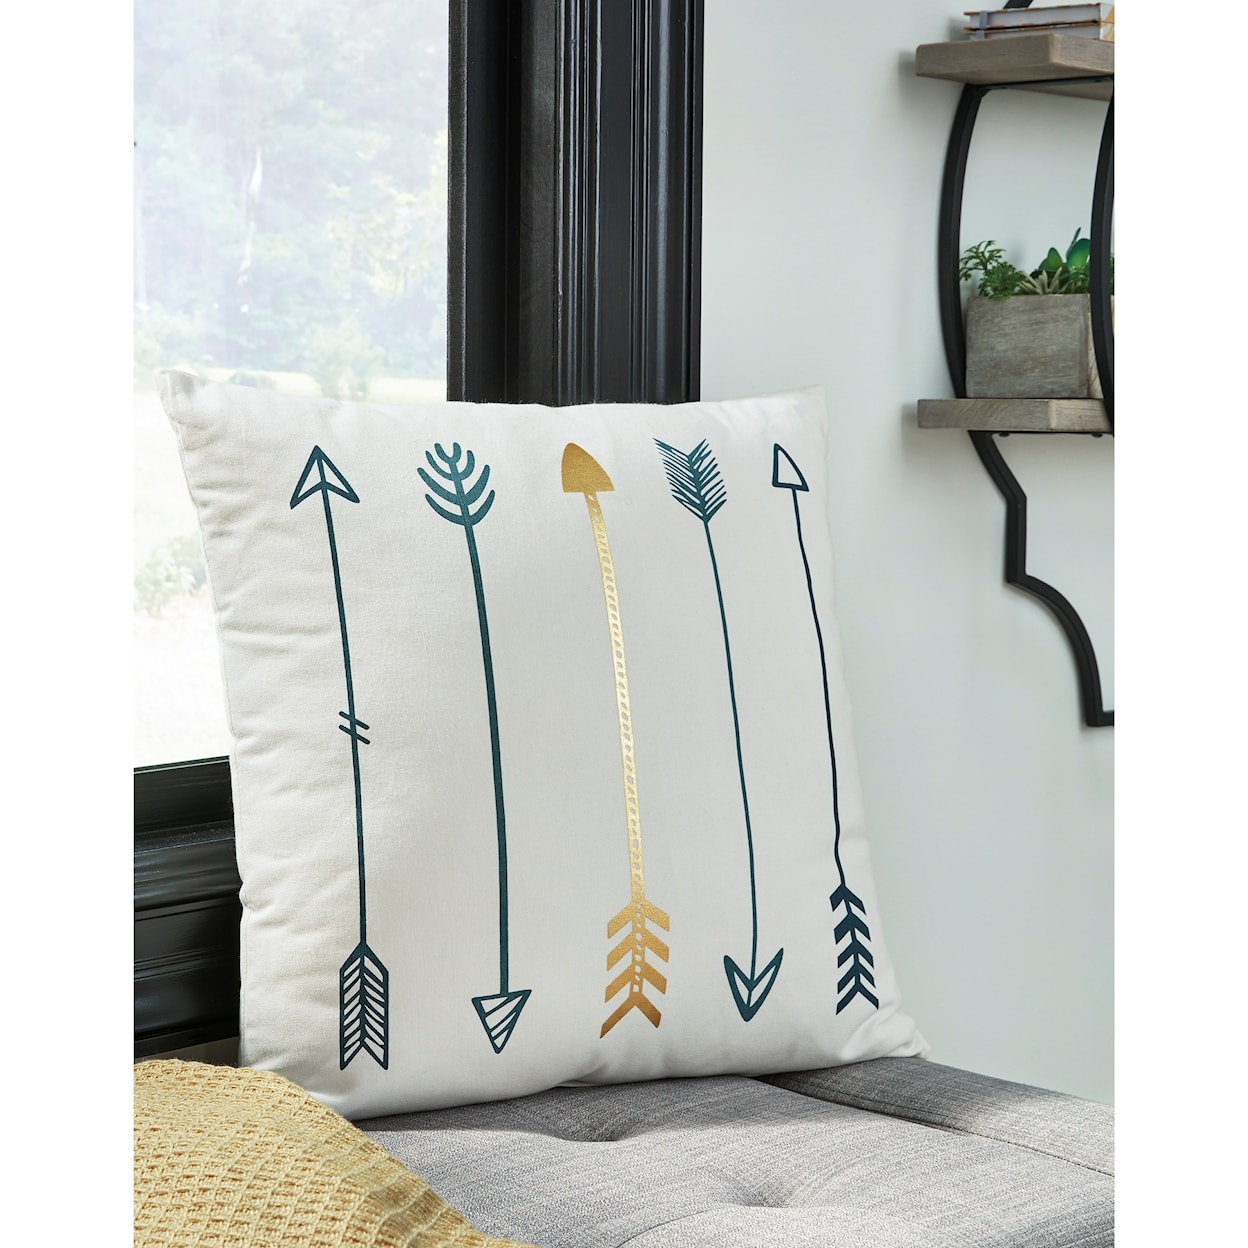 Ashley Furniture Signature Design Gyldan Gyldan White/Teal/Gold Pillow